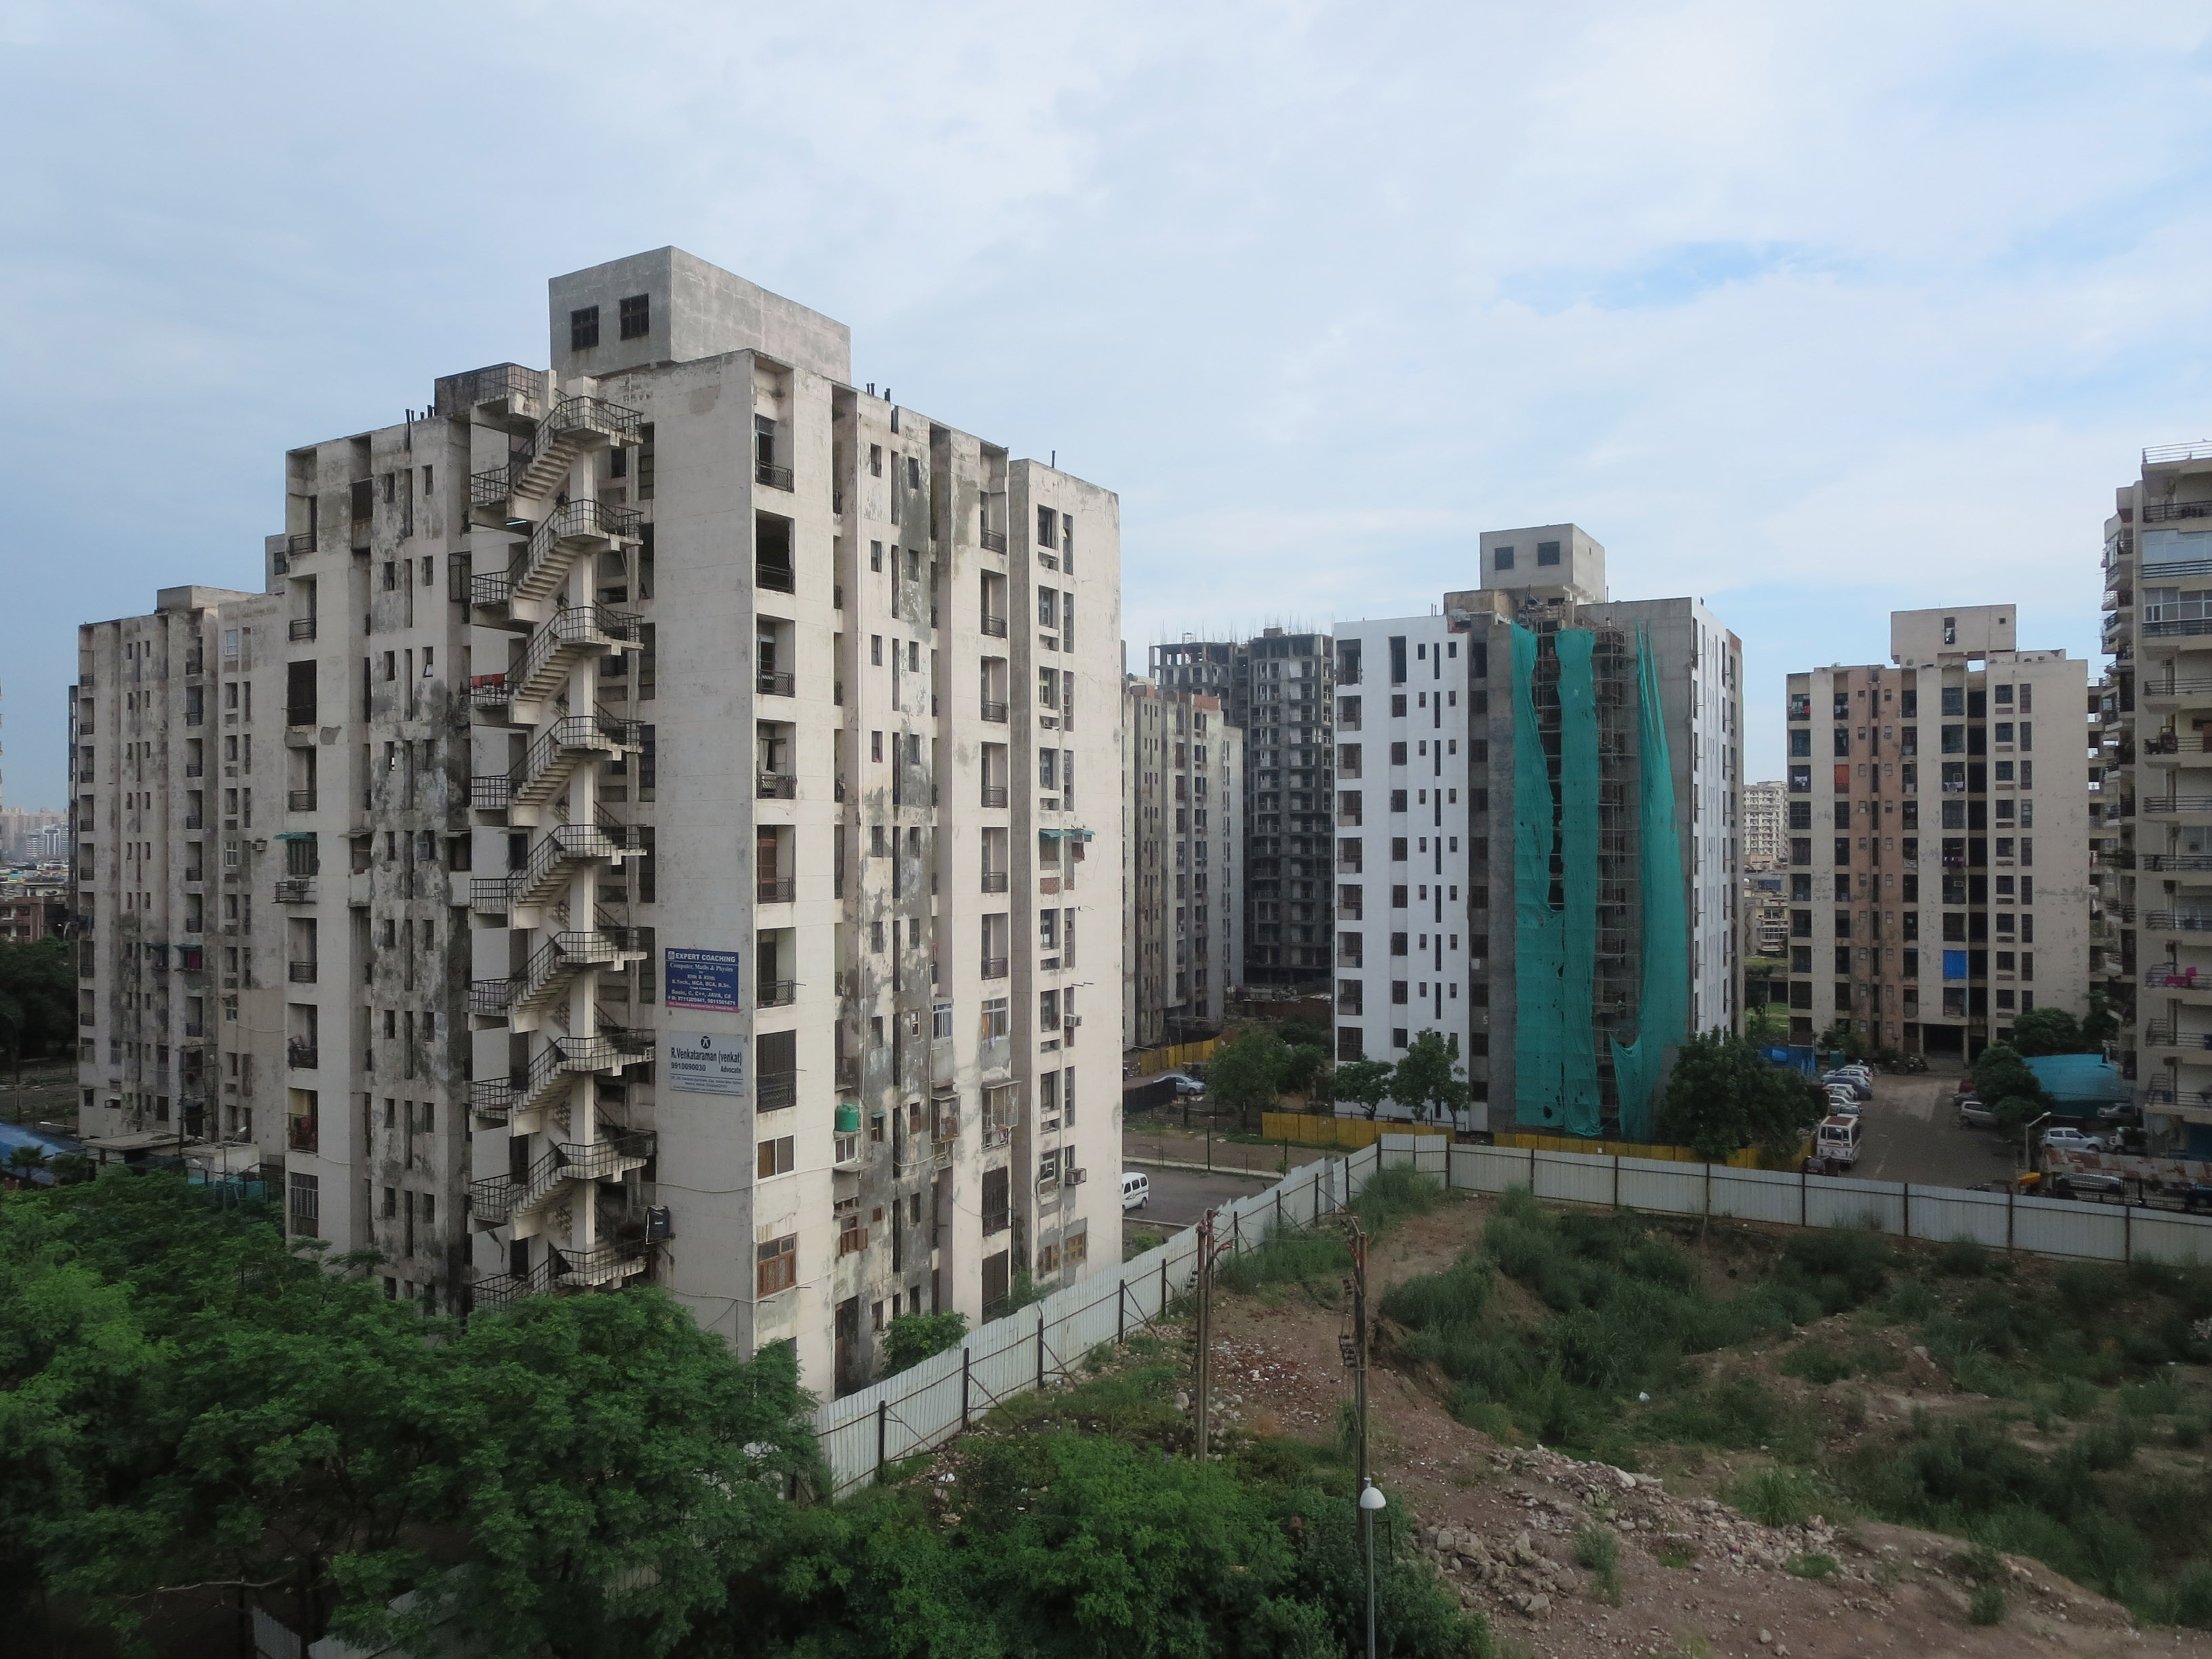 Residential area, Vaishali, Delhi